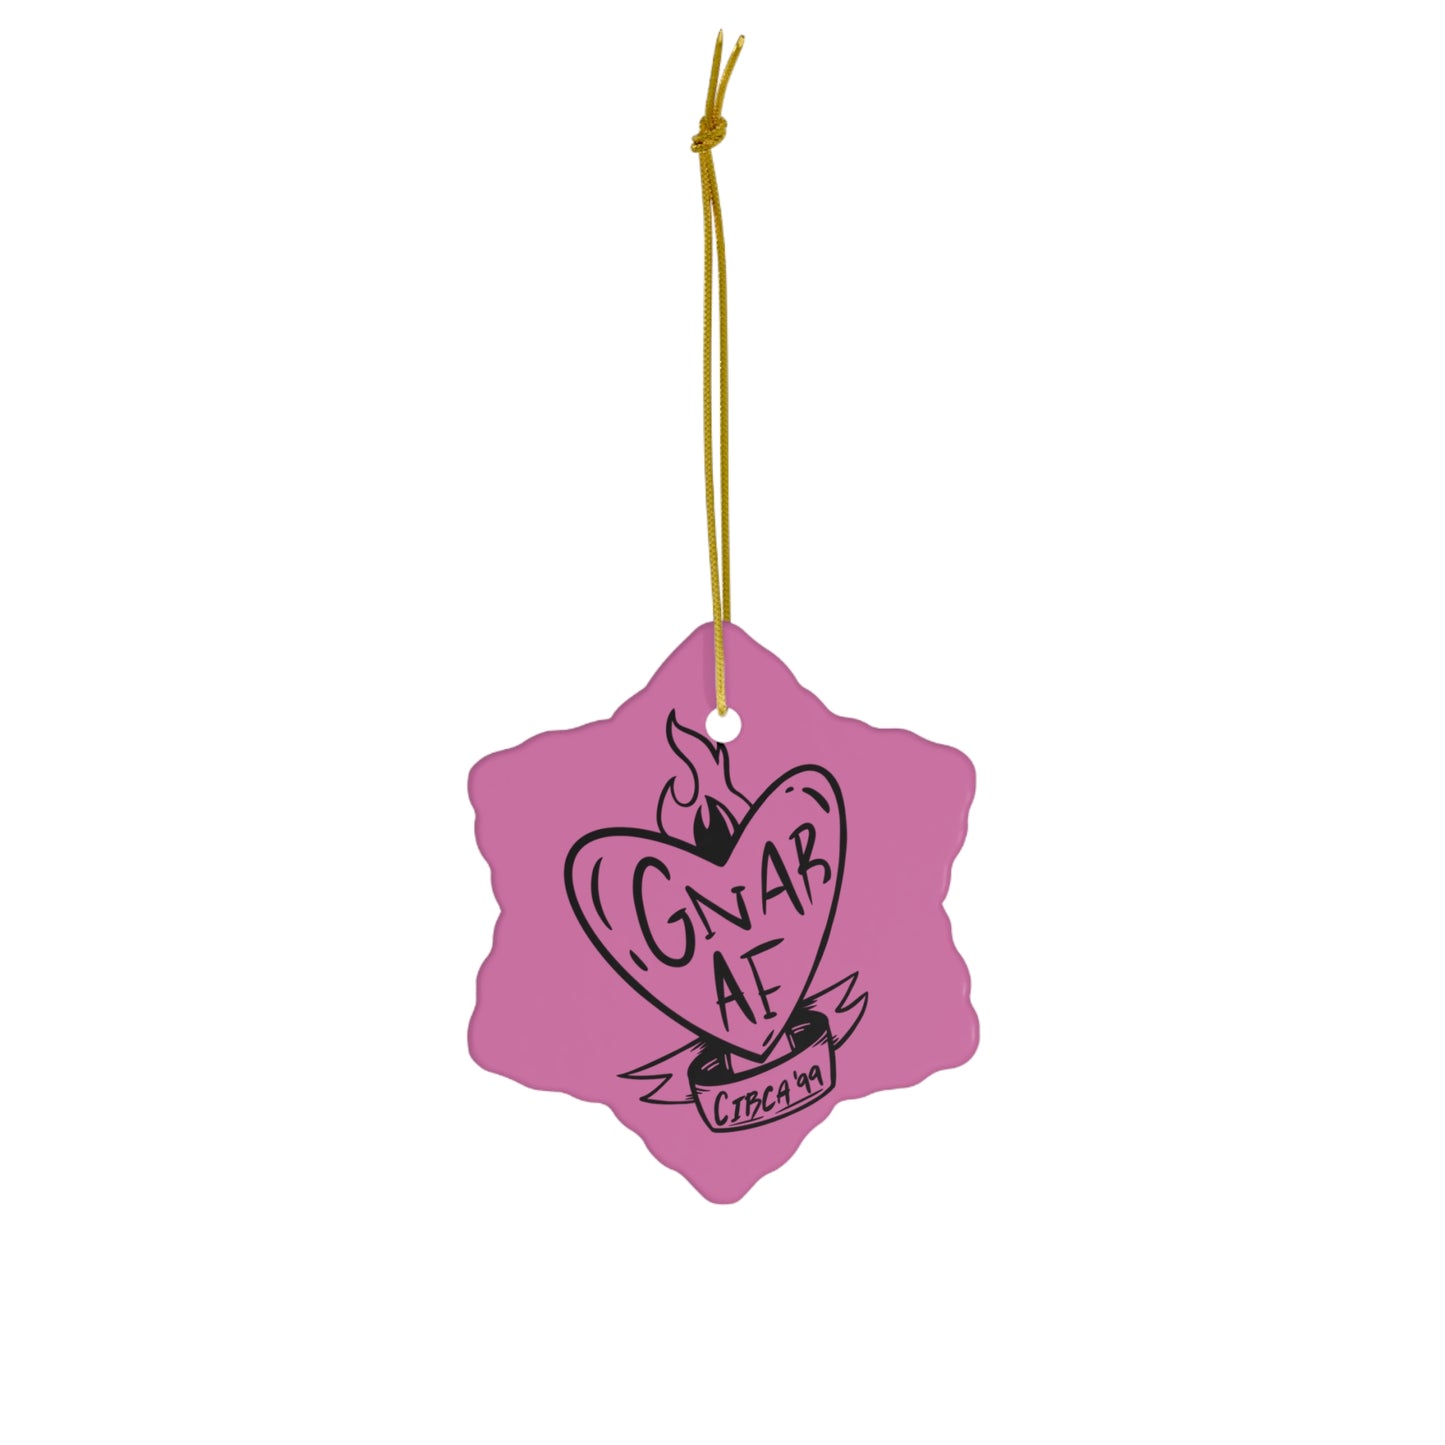 Gnar AF B&W Logo Pink Ceramic Ornament, 4 Shapes